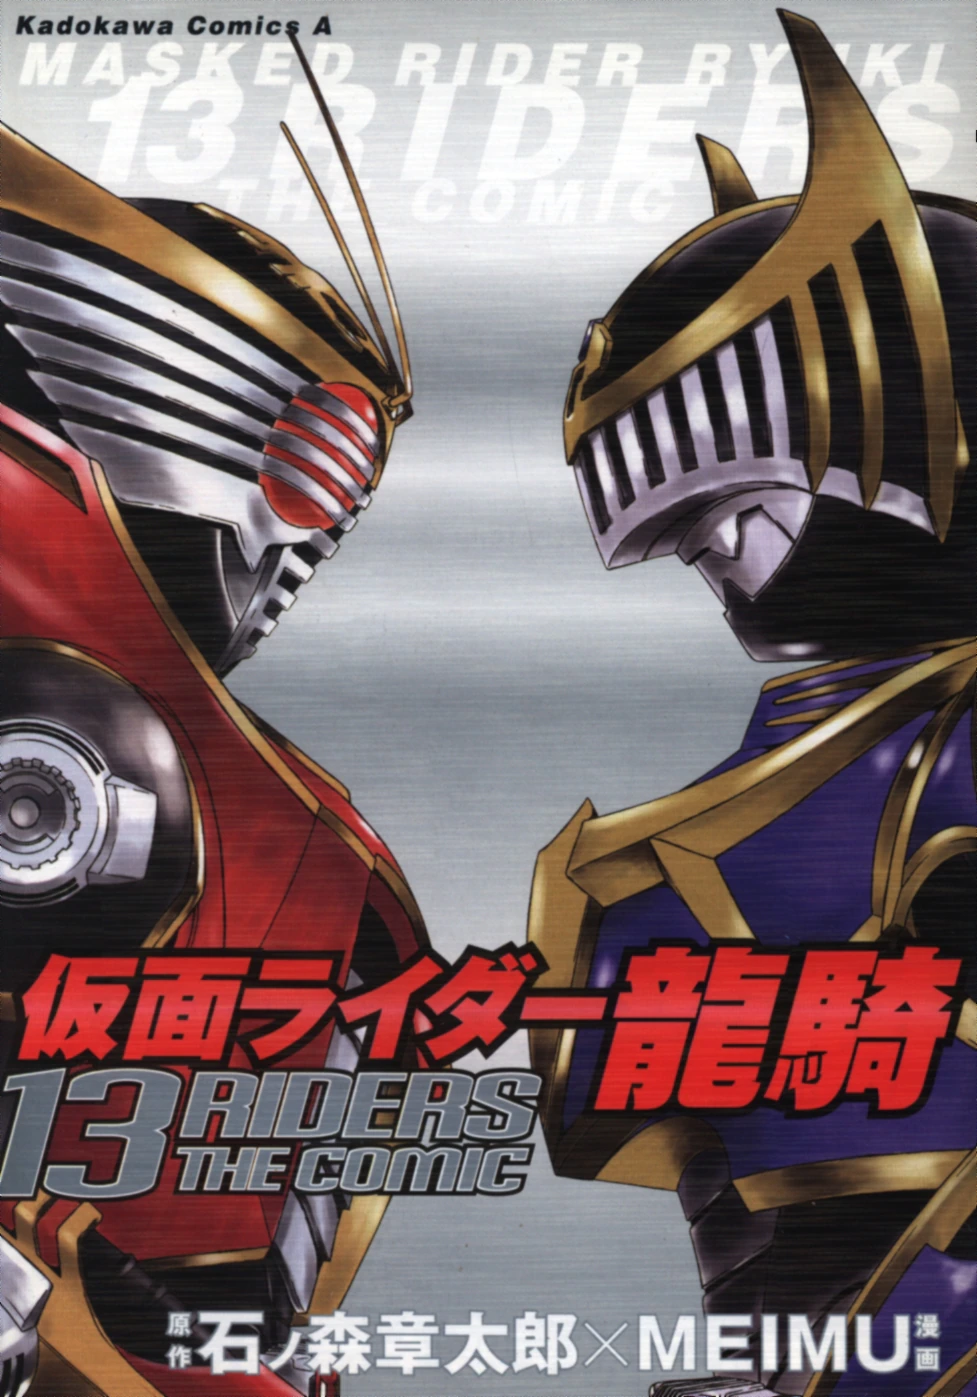 Masked Rider Ryuuki - 13 Riders the Comic cover 0